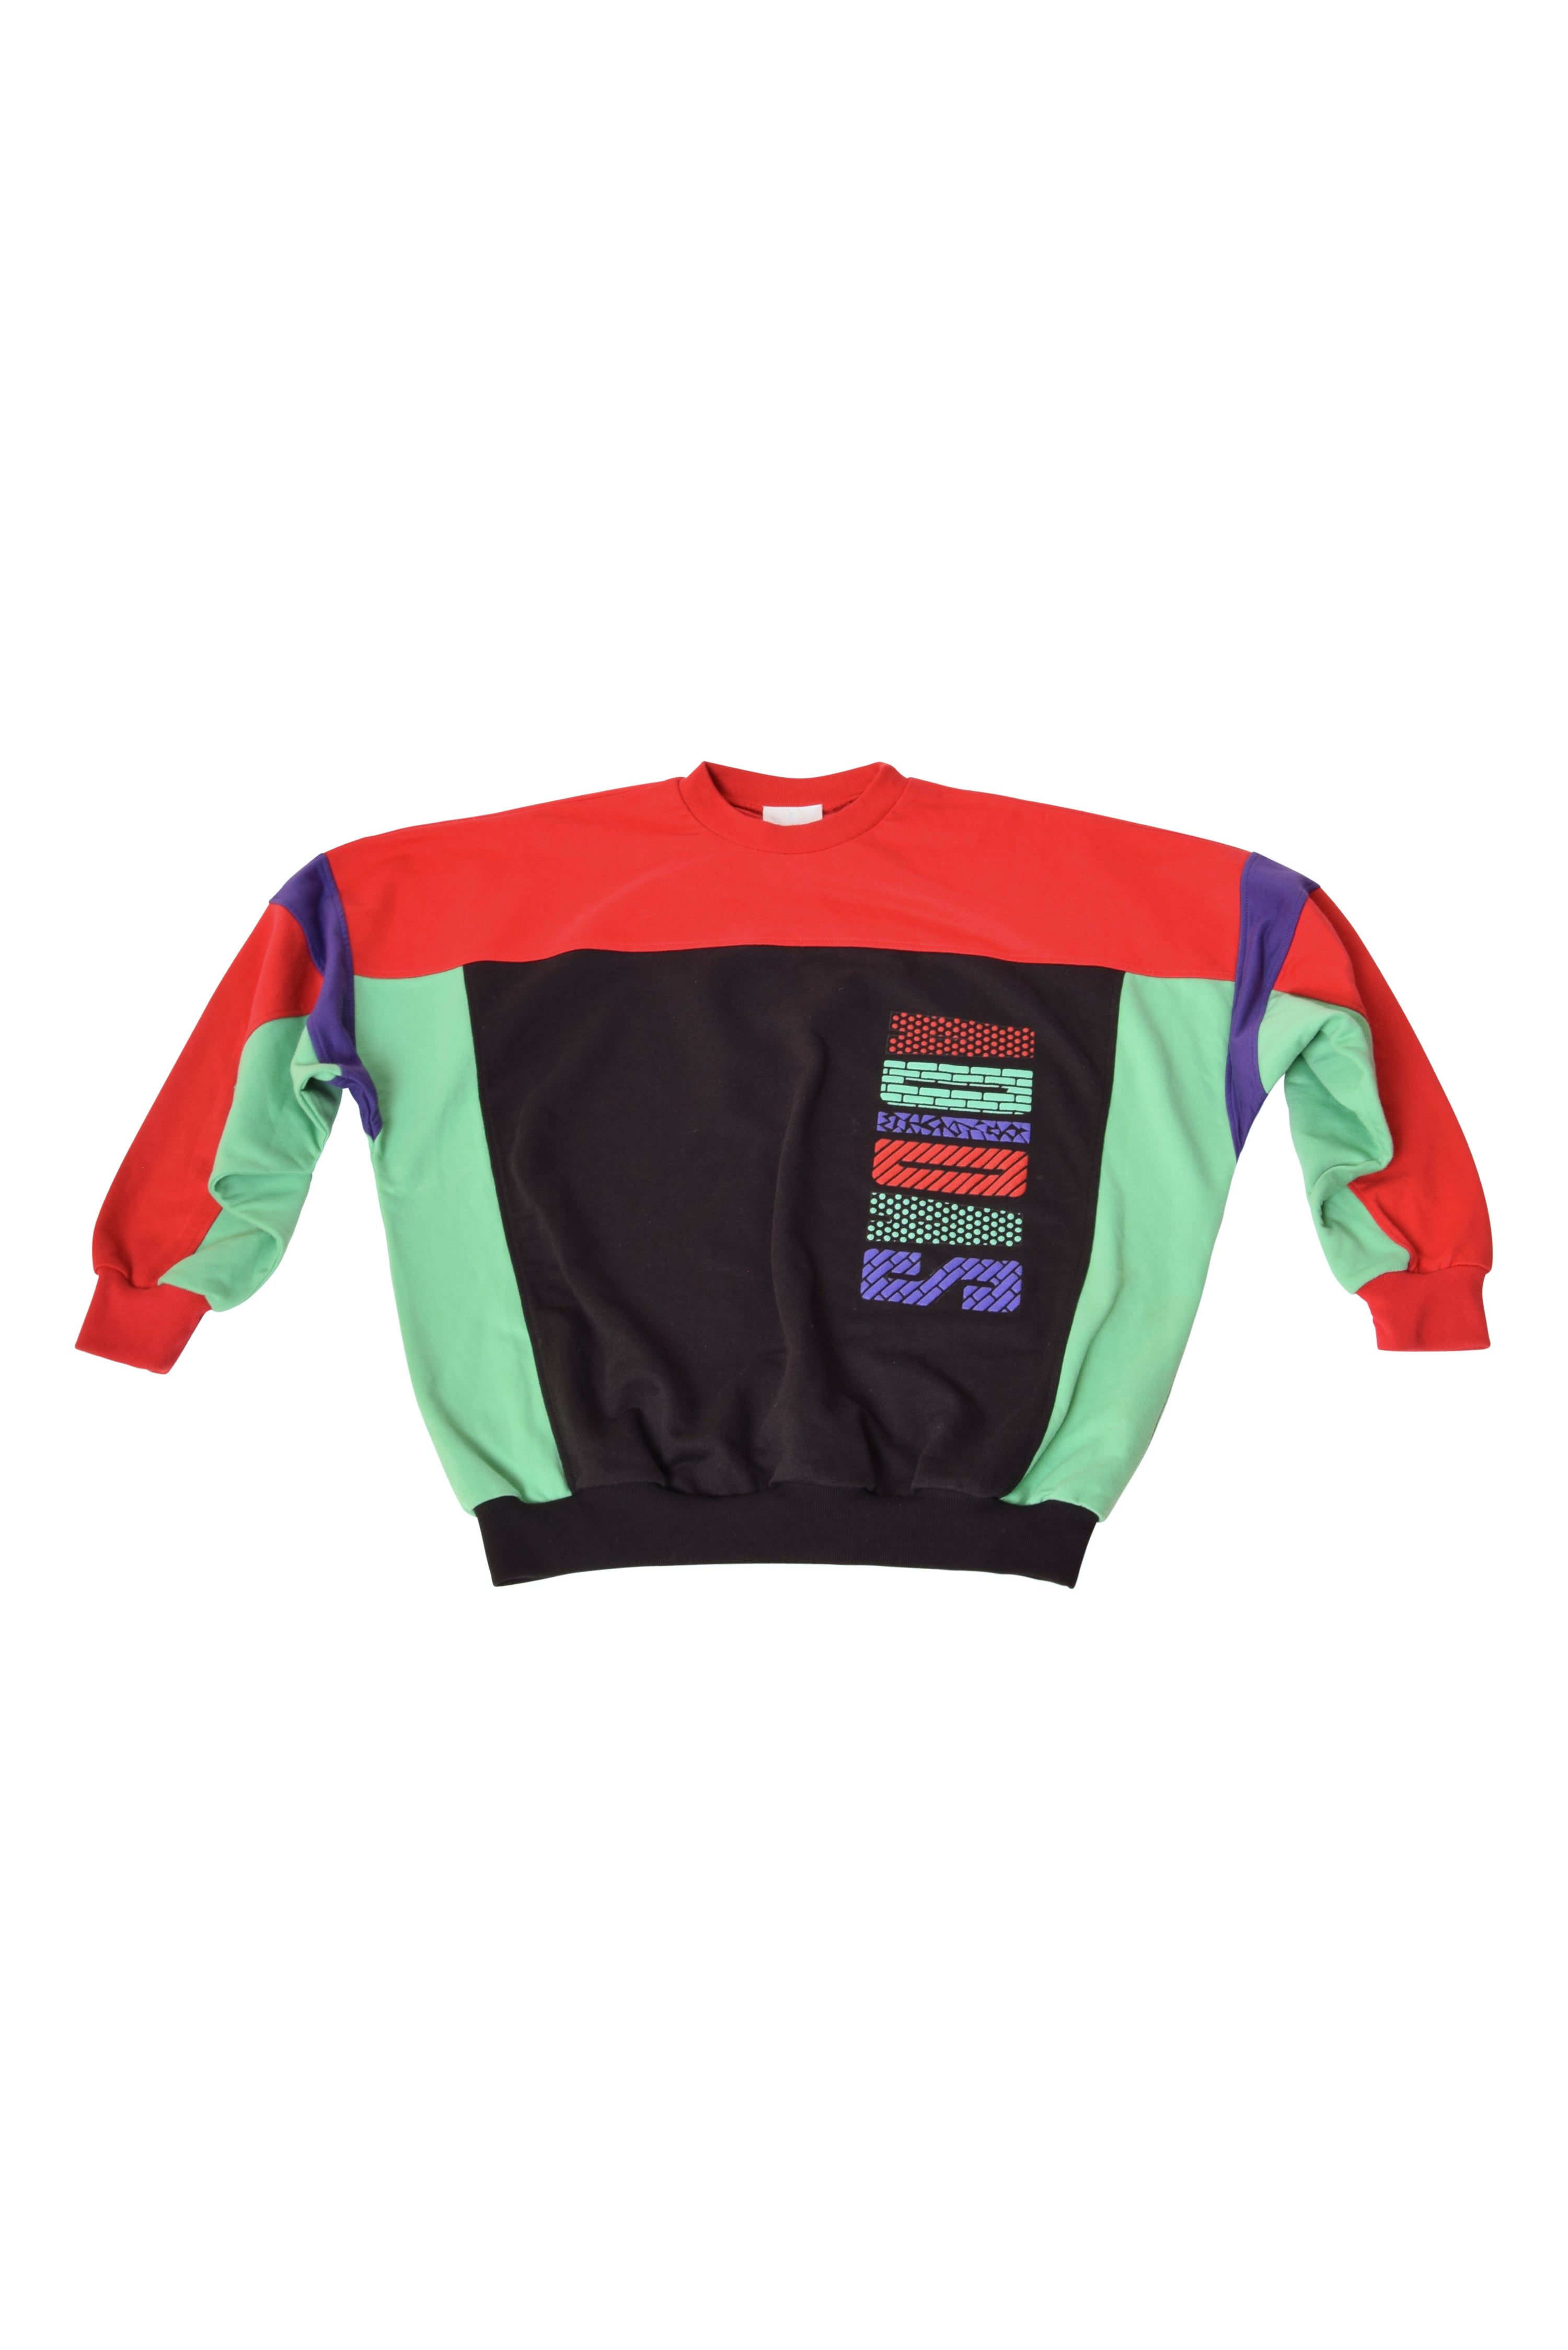 Vintage Adidas Sweatshirt Crew Neck Size L-XL Red Black Green Blue ...